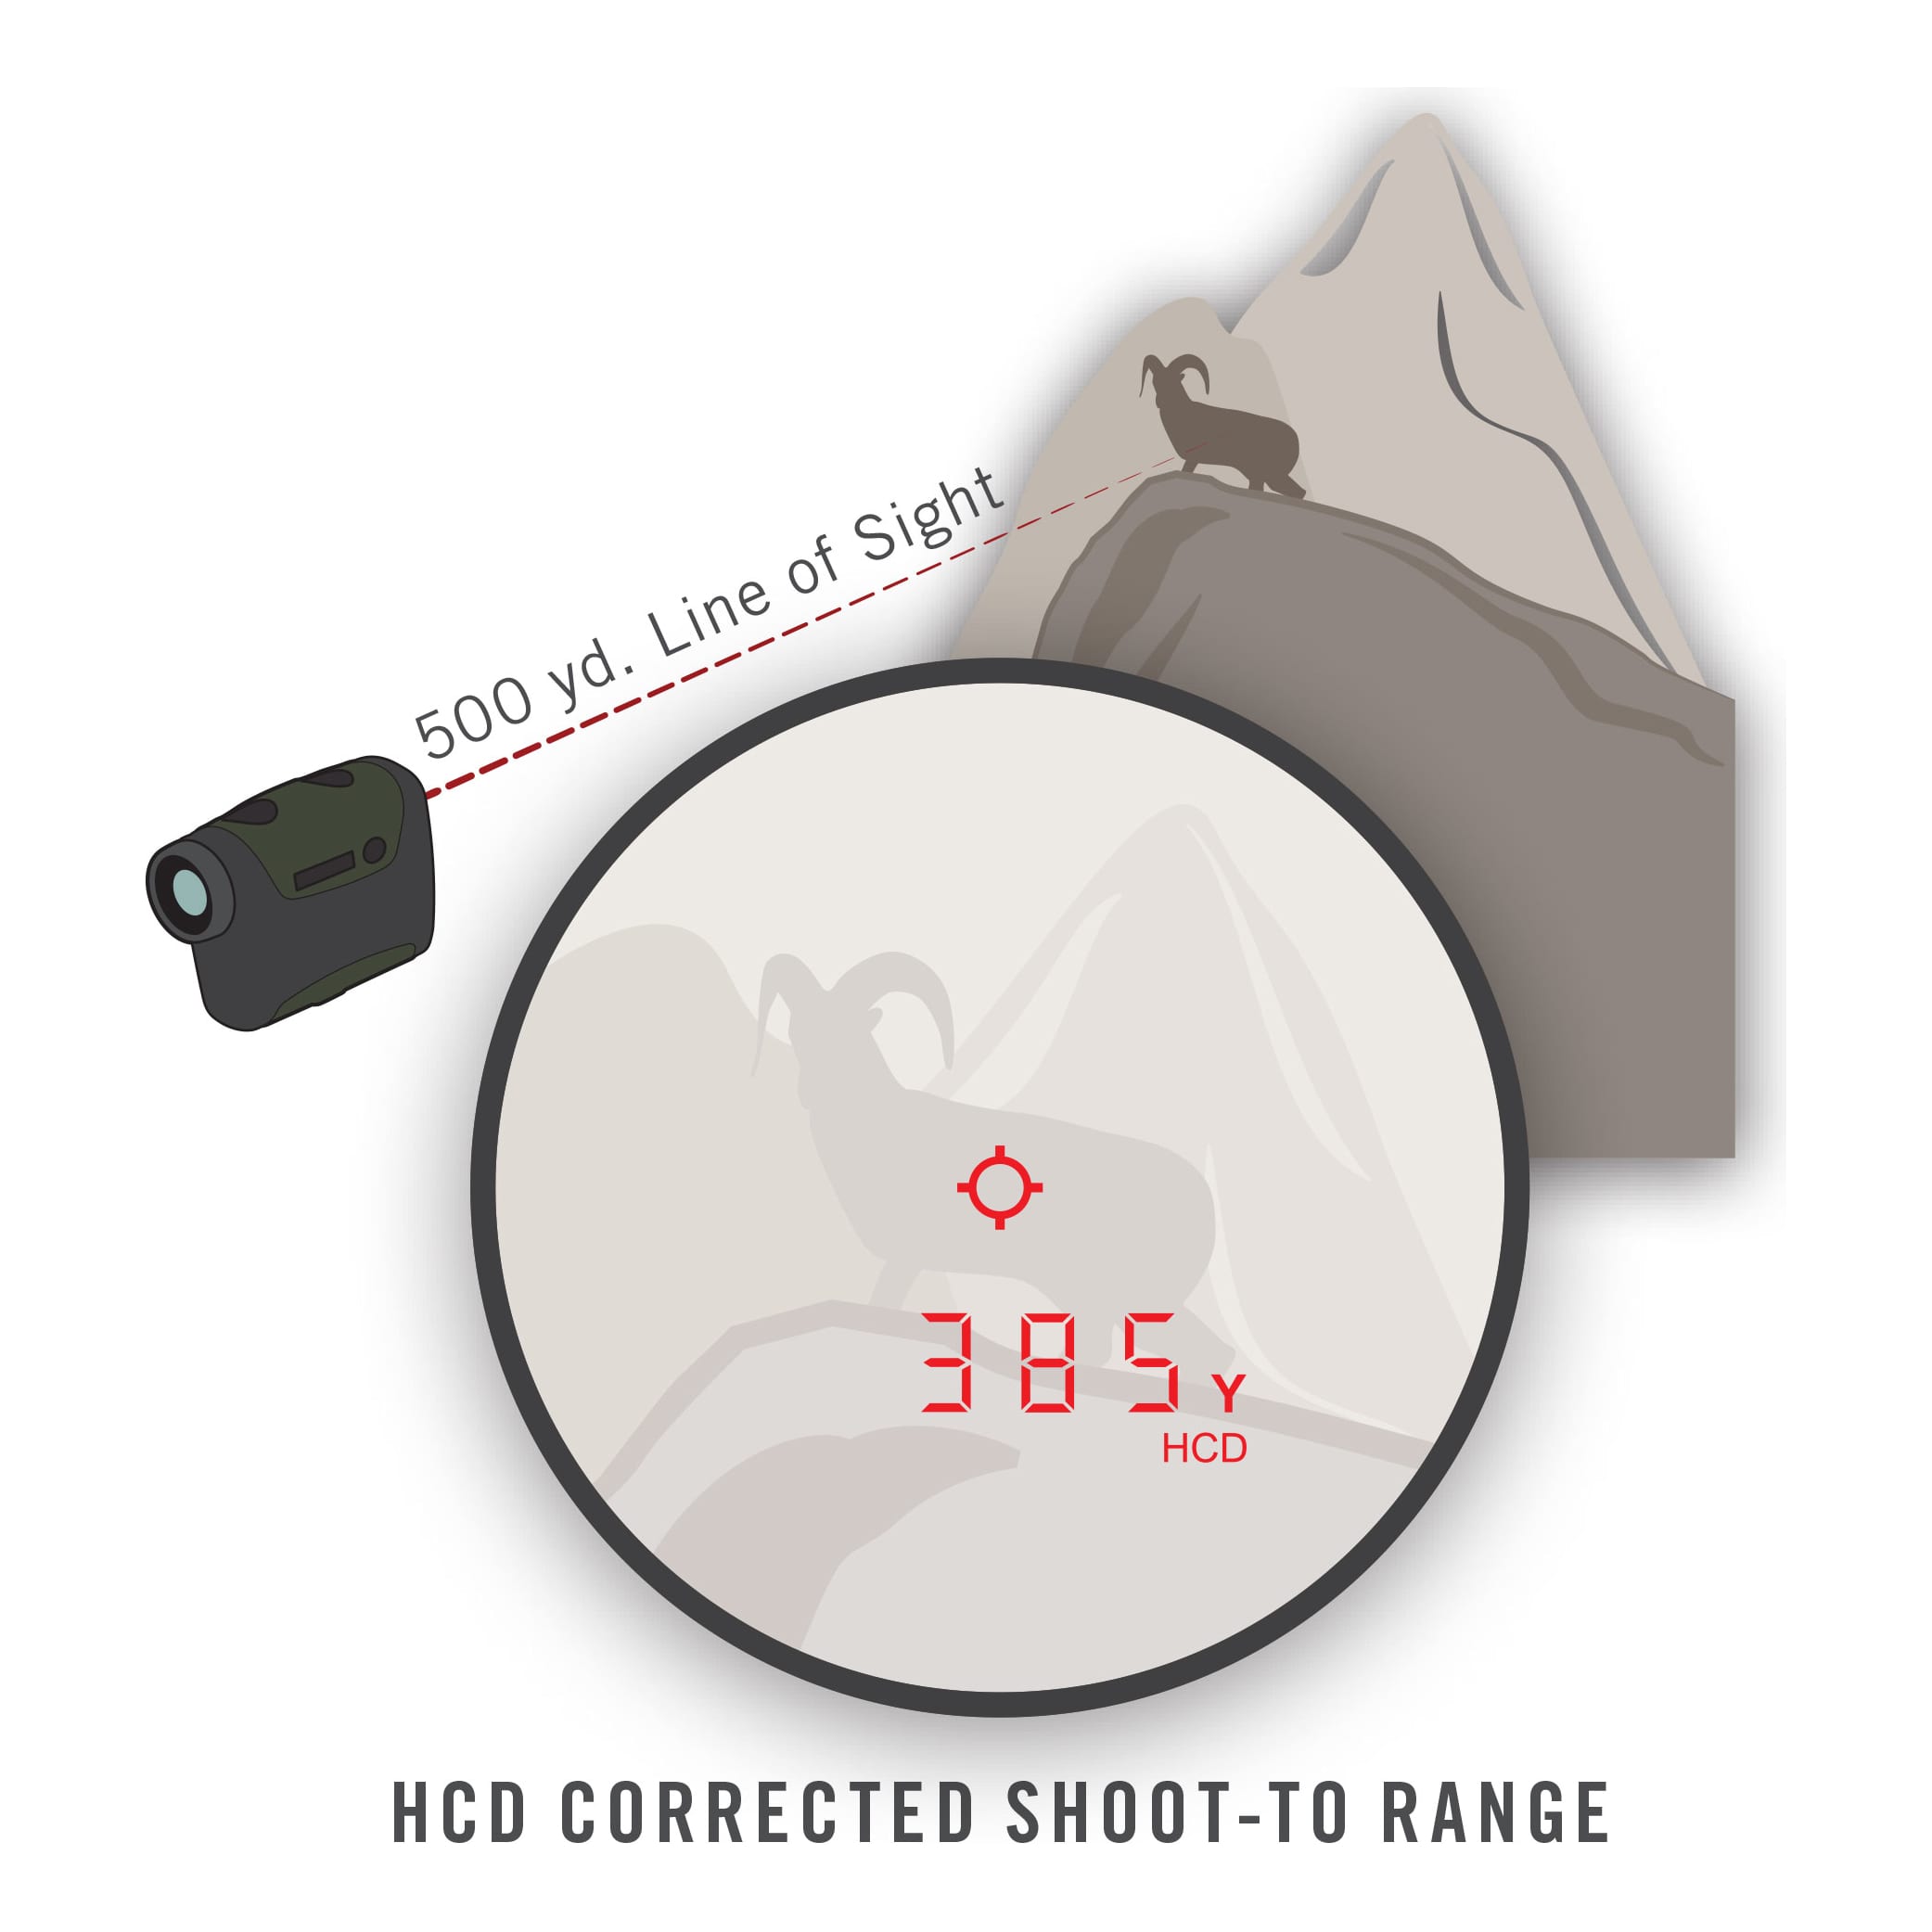 HCD Corrected Shoot-To Range